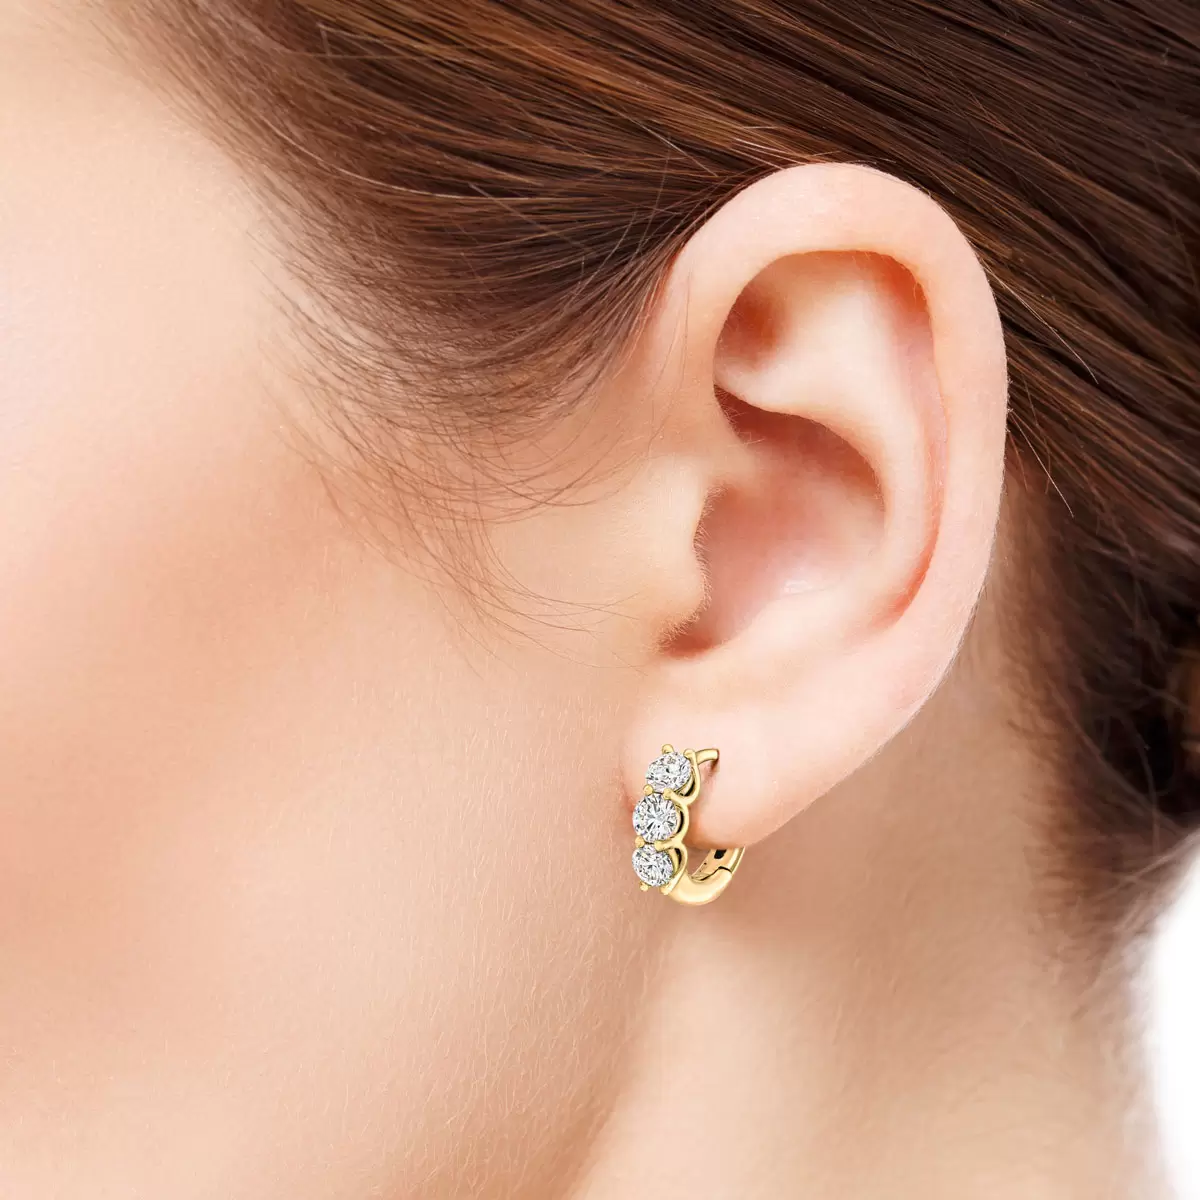 1.18ctw 3 Stone Diamond Hoop Earrings, 14ct Yellow Gold